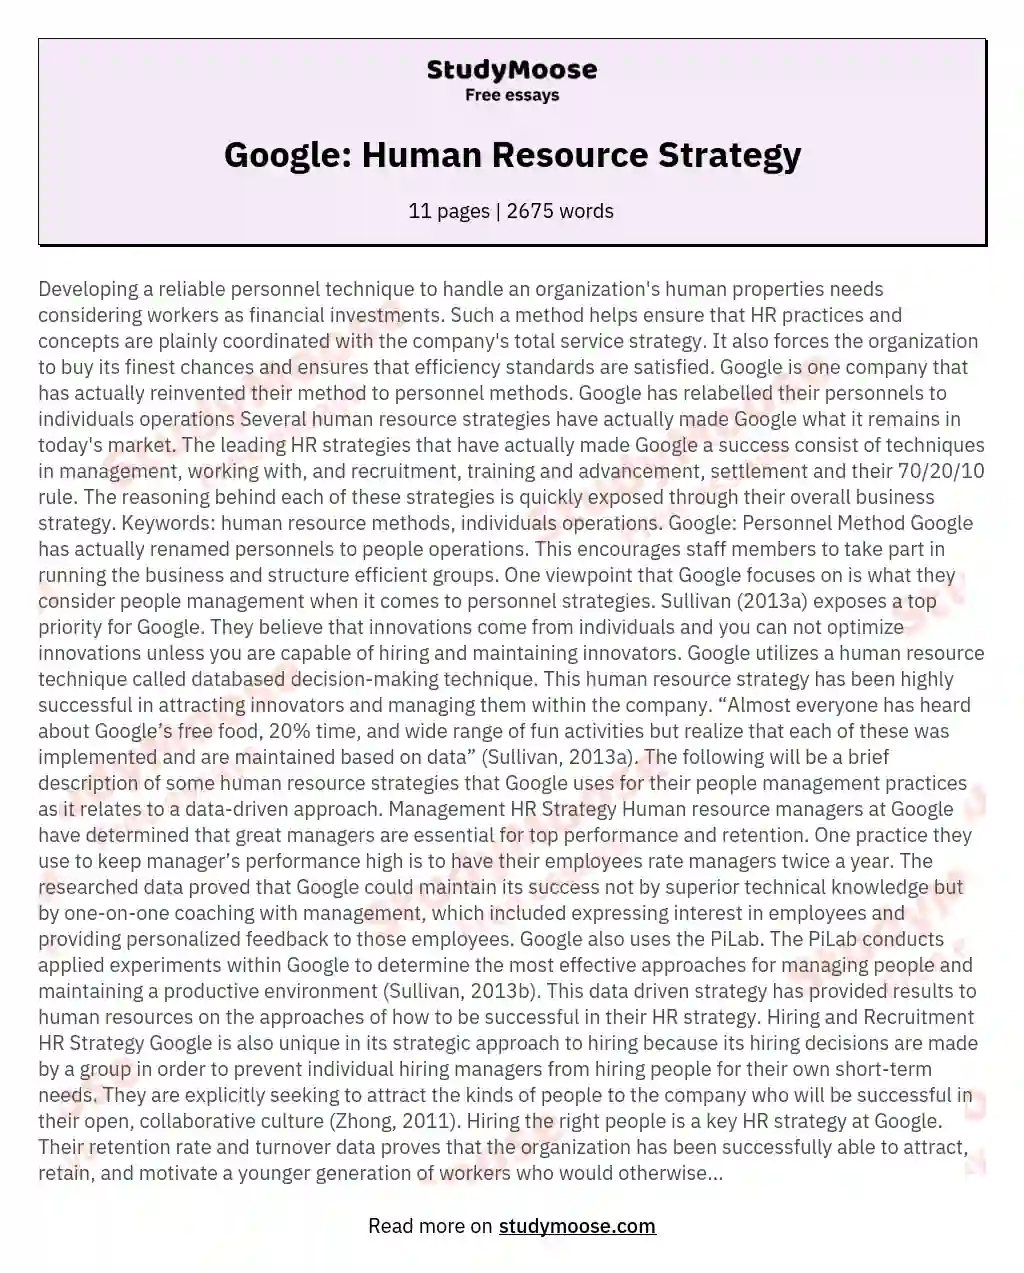 Google: Human Resource Strategy essay